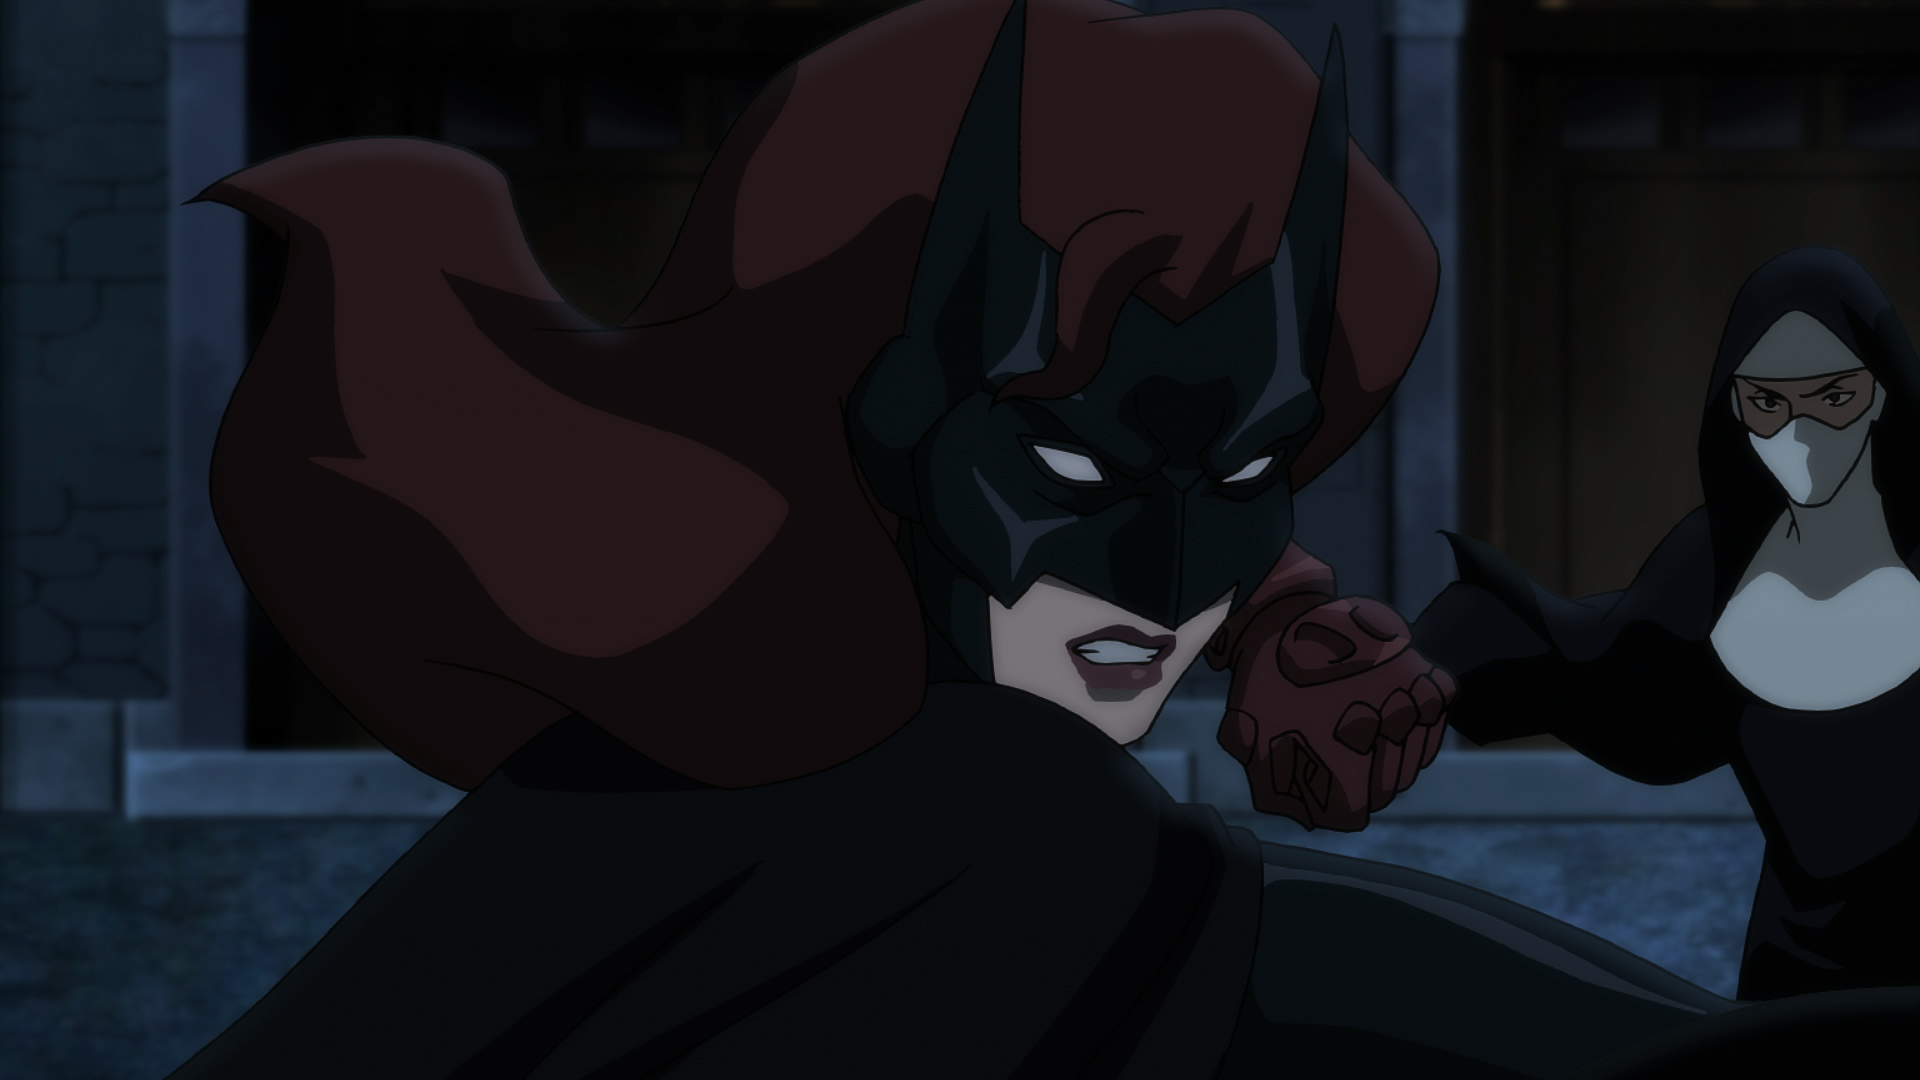 Batman batwoman. Бэтмен тайна Бэтвумен. Бэтмен дурная кровь. Бэтвумен дурная кровь.